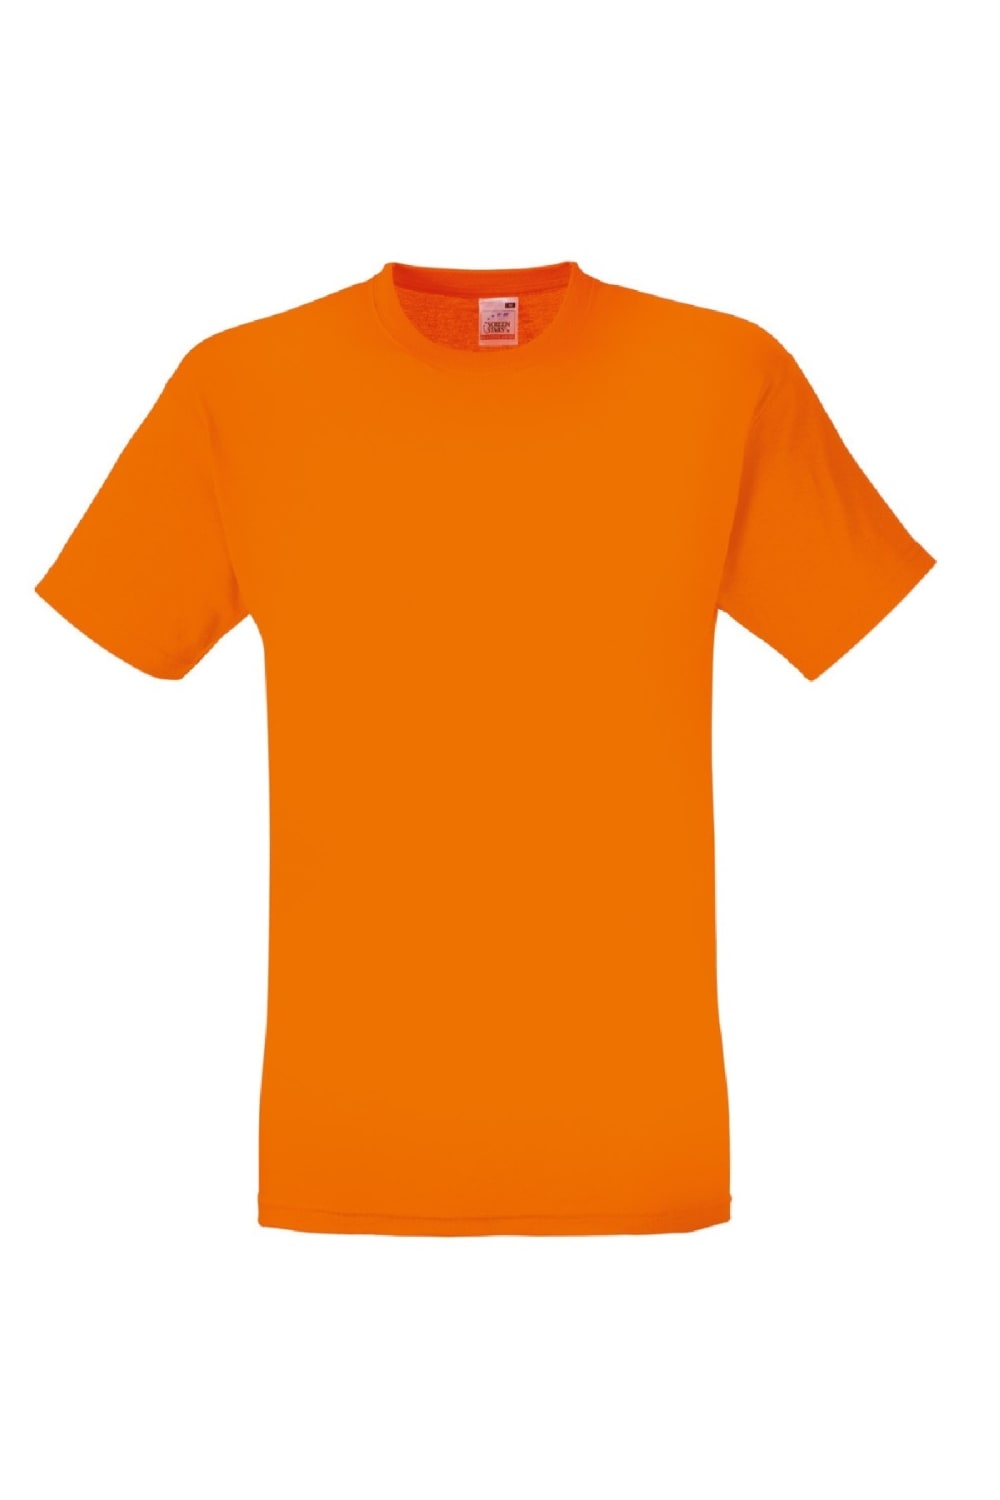 Fruit Of The Loom Mens Screen Stars Original Full Cut Short Sleeve T-Shirt (Orange)